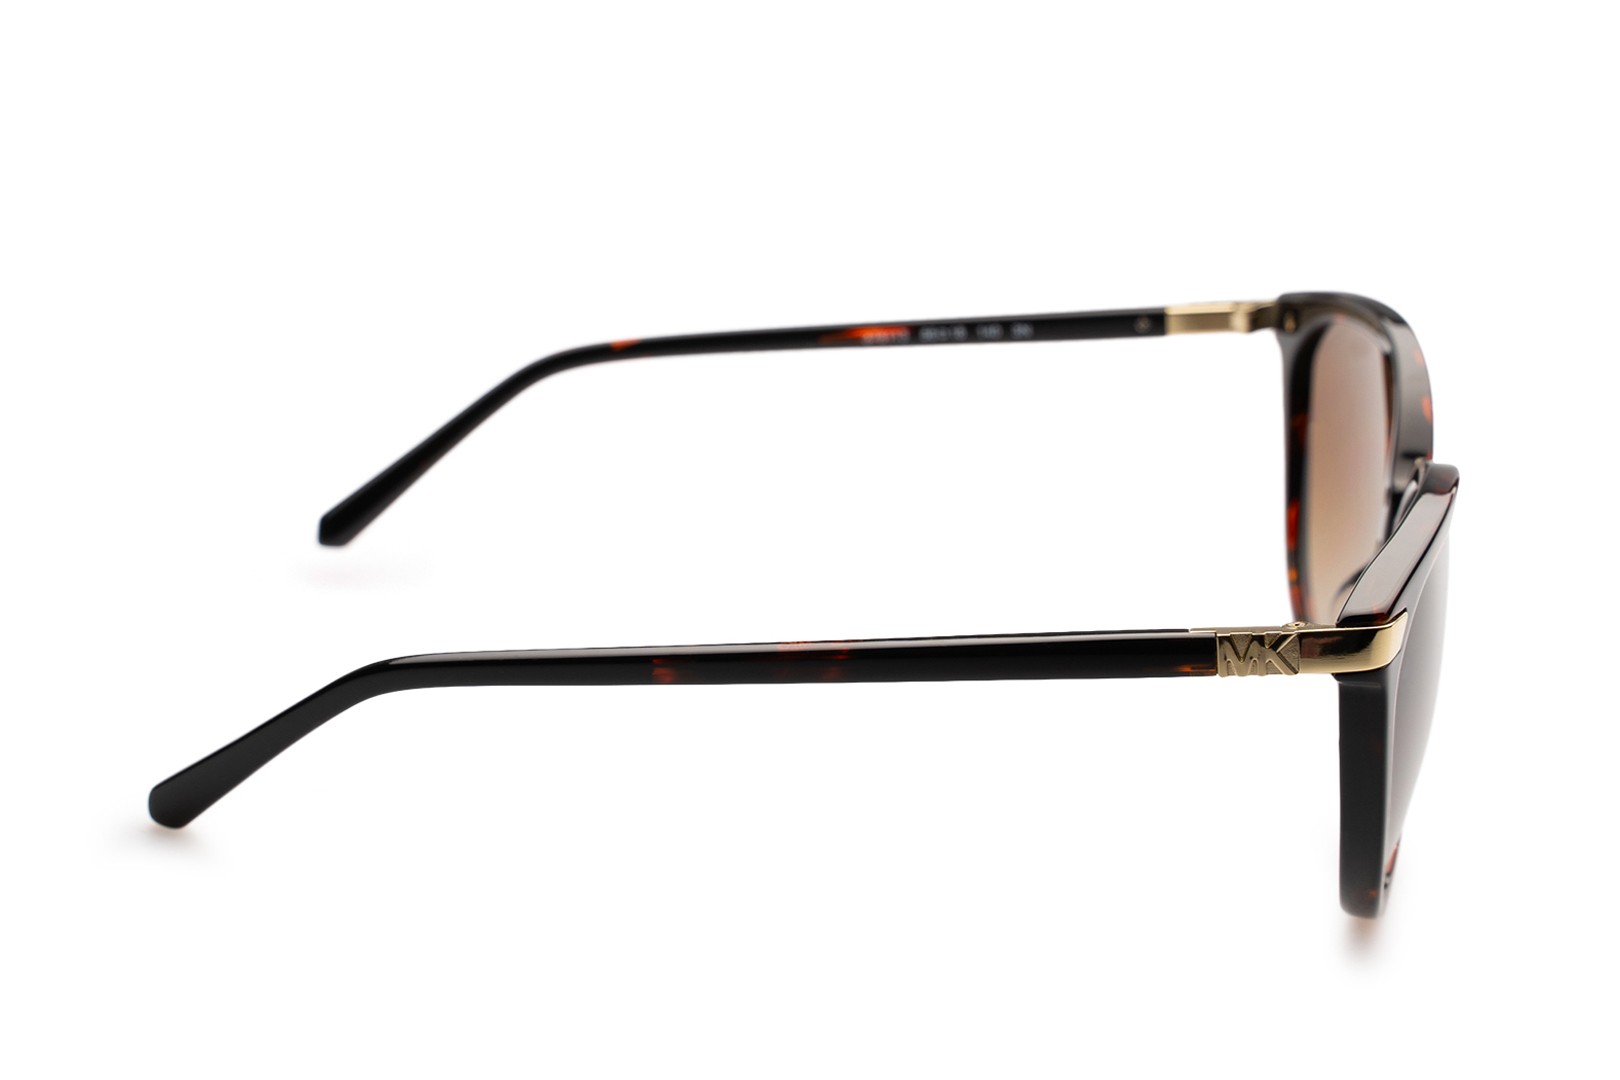 Michael Kors MK2103 CLAREMONT Sunglasses  FREE Shipping